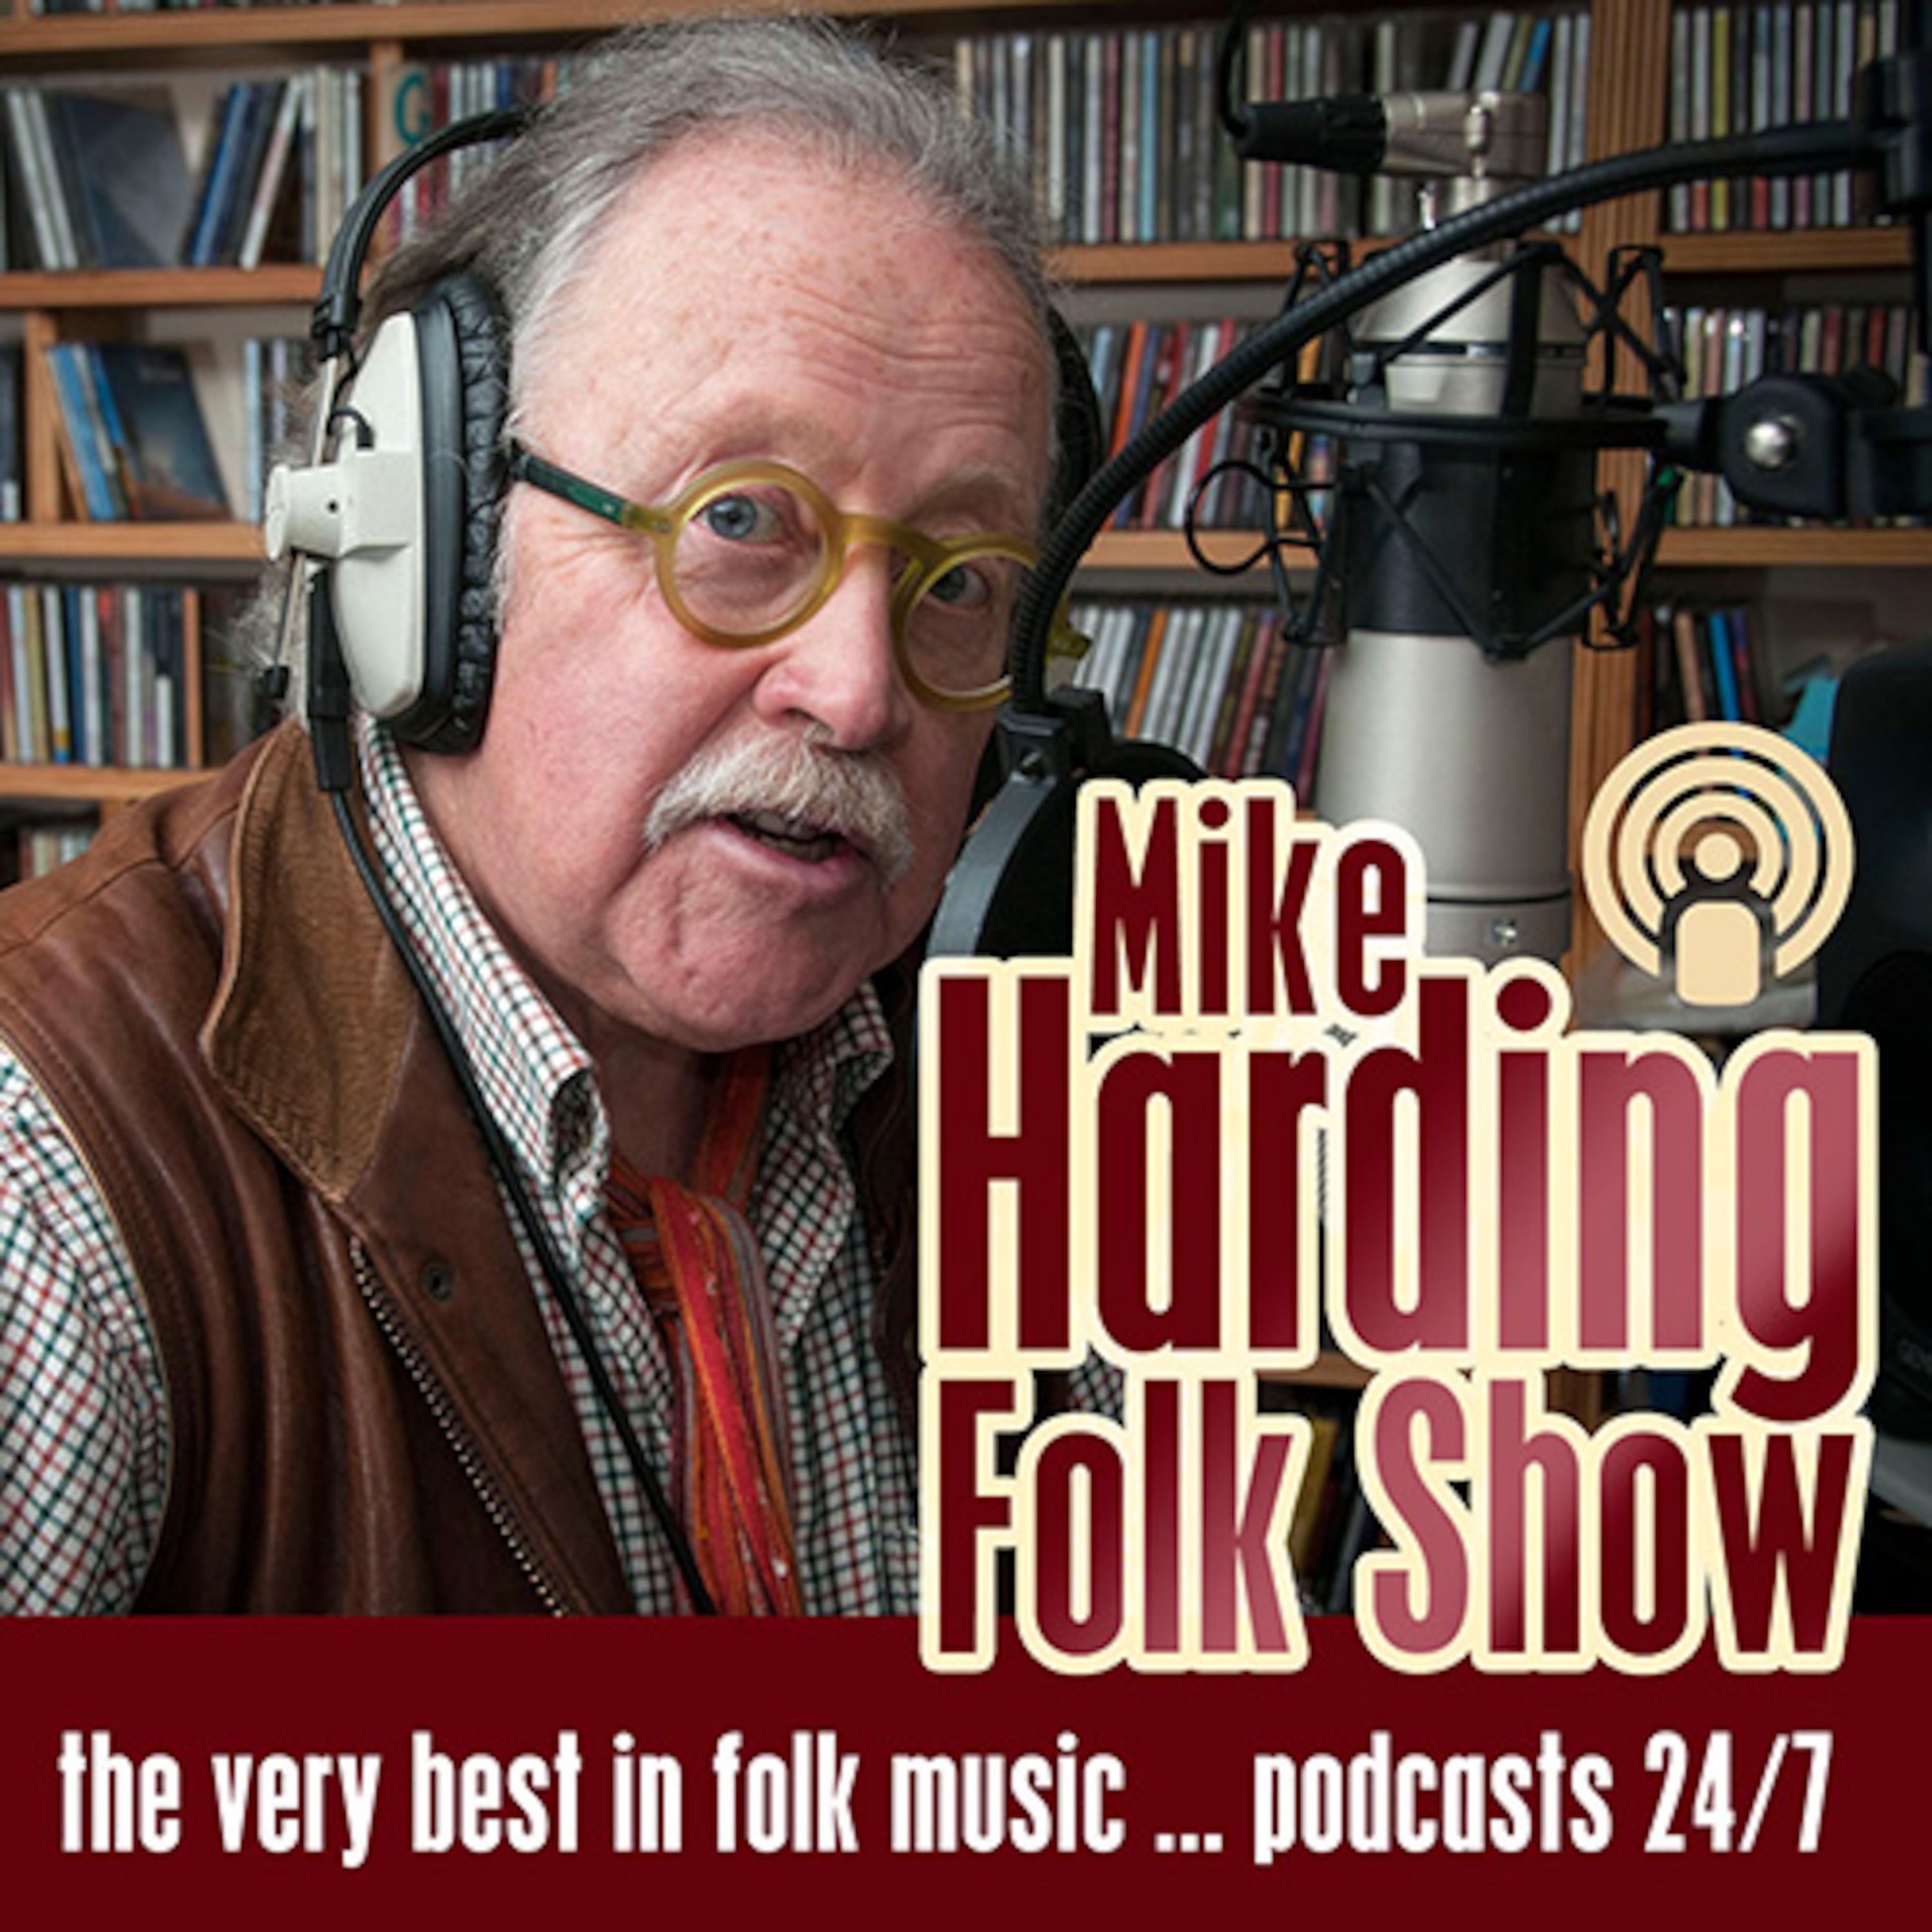 Mike Harding Folk Show 258